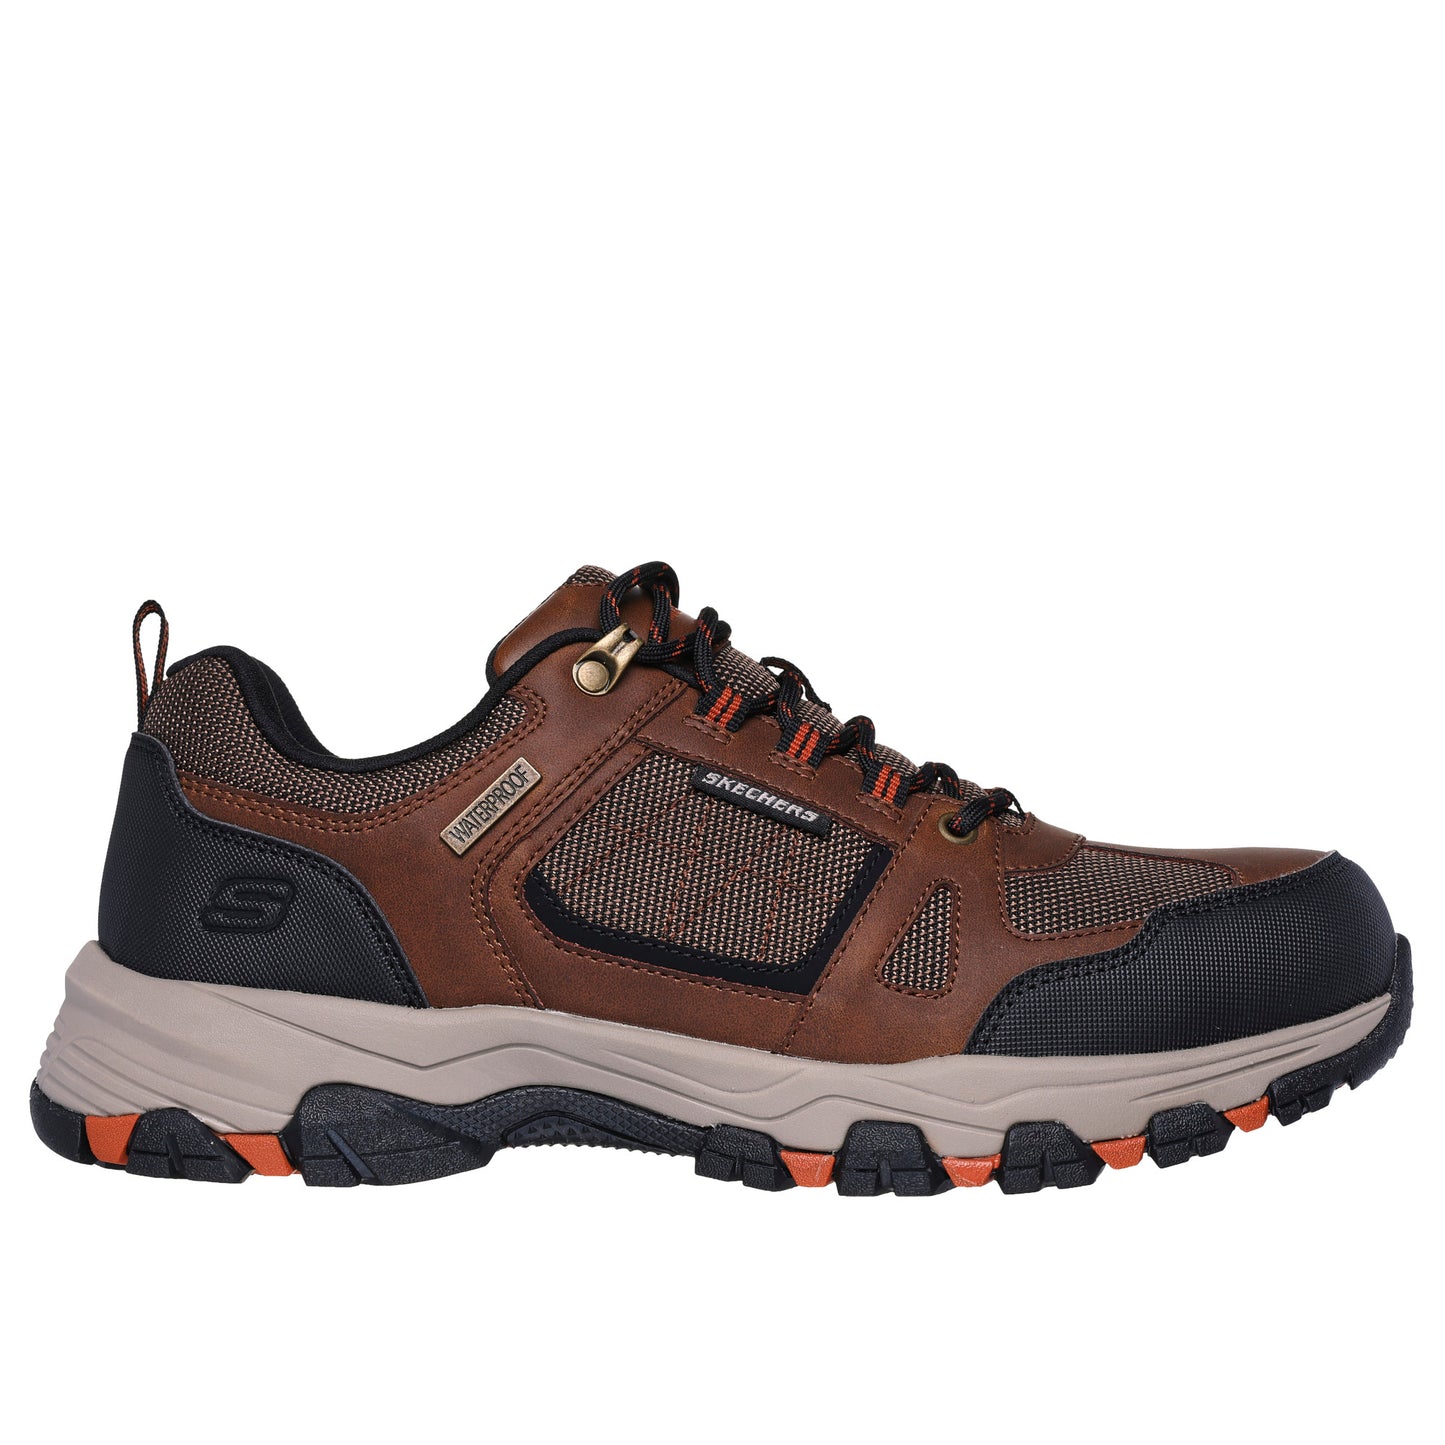 Skechers 204937 Selmen - Forel Brown Black Casual Shoes